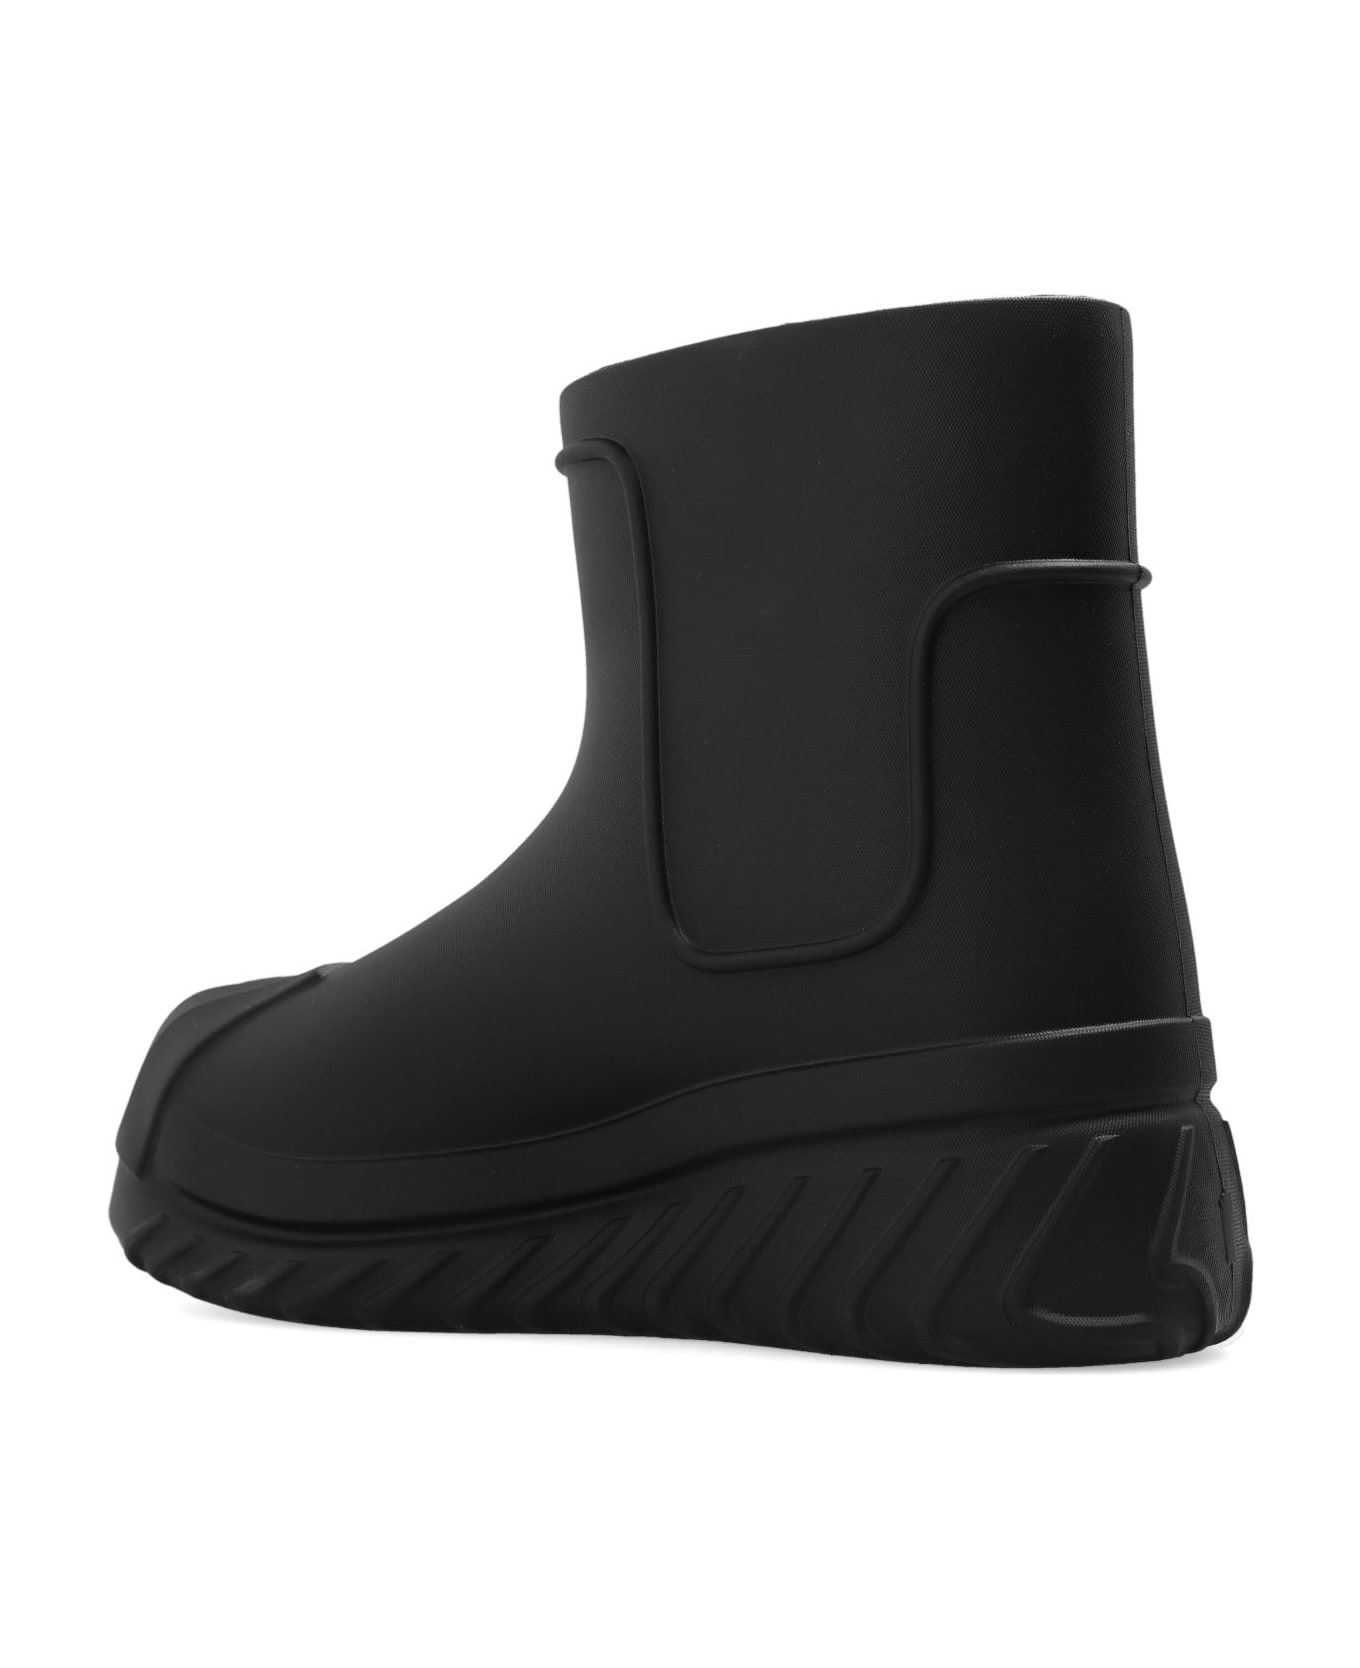 Adidas Originals 'adifom Superstar' Rain Boots - Black